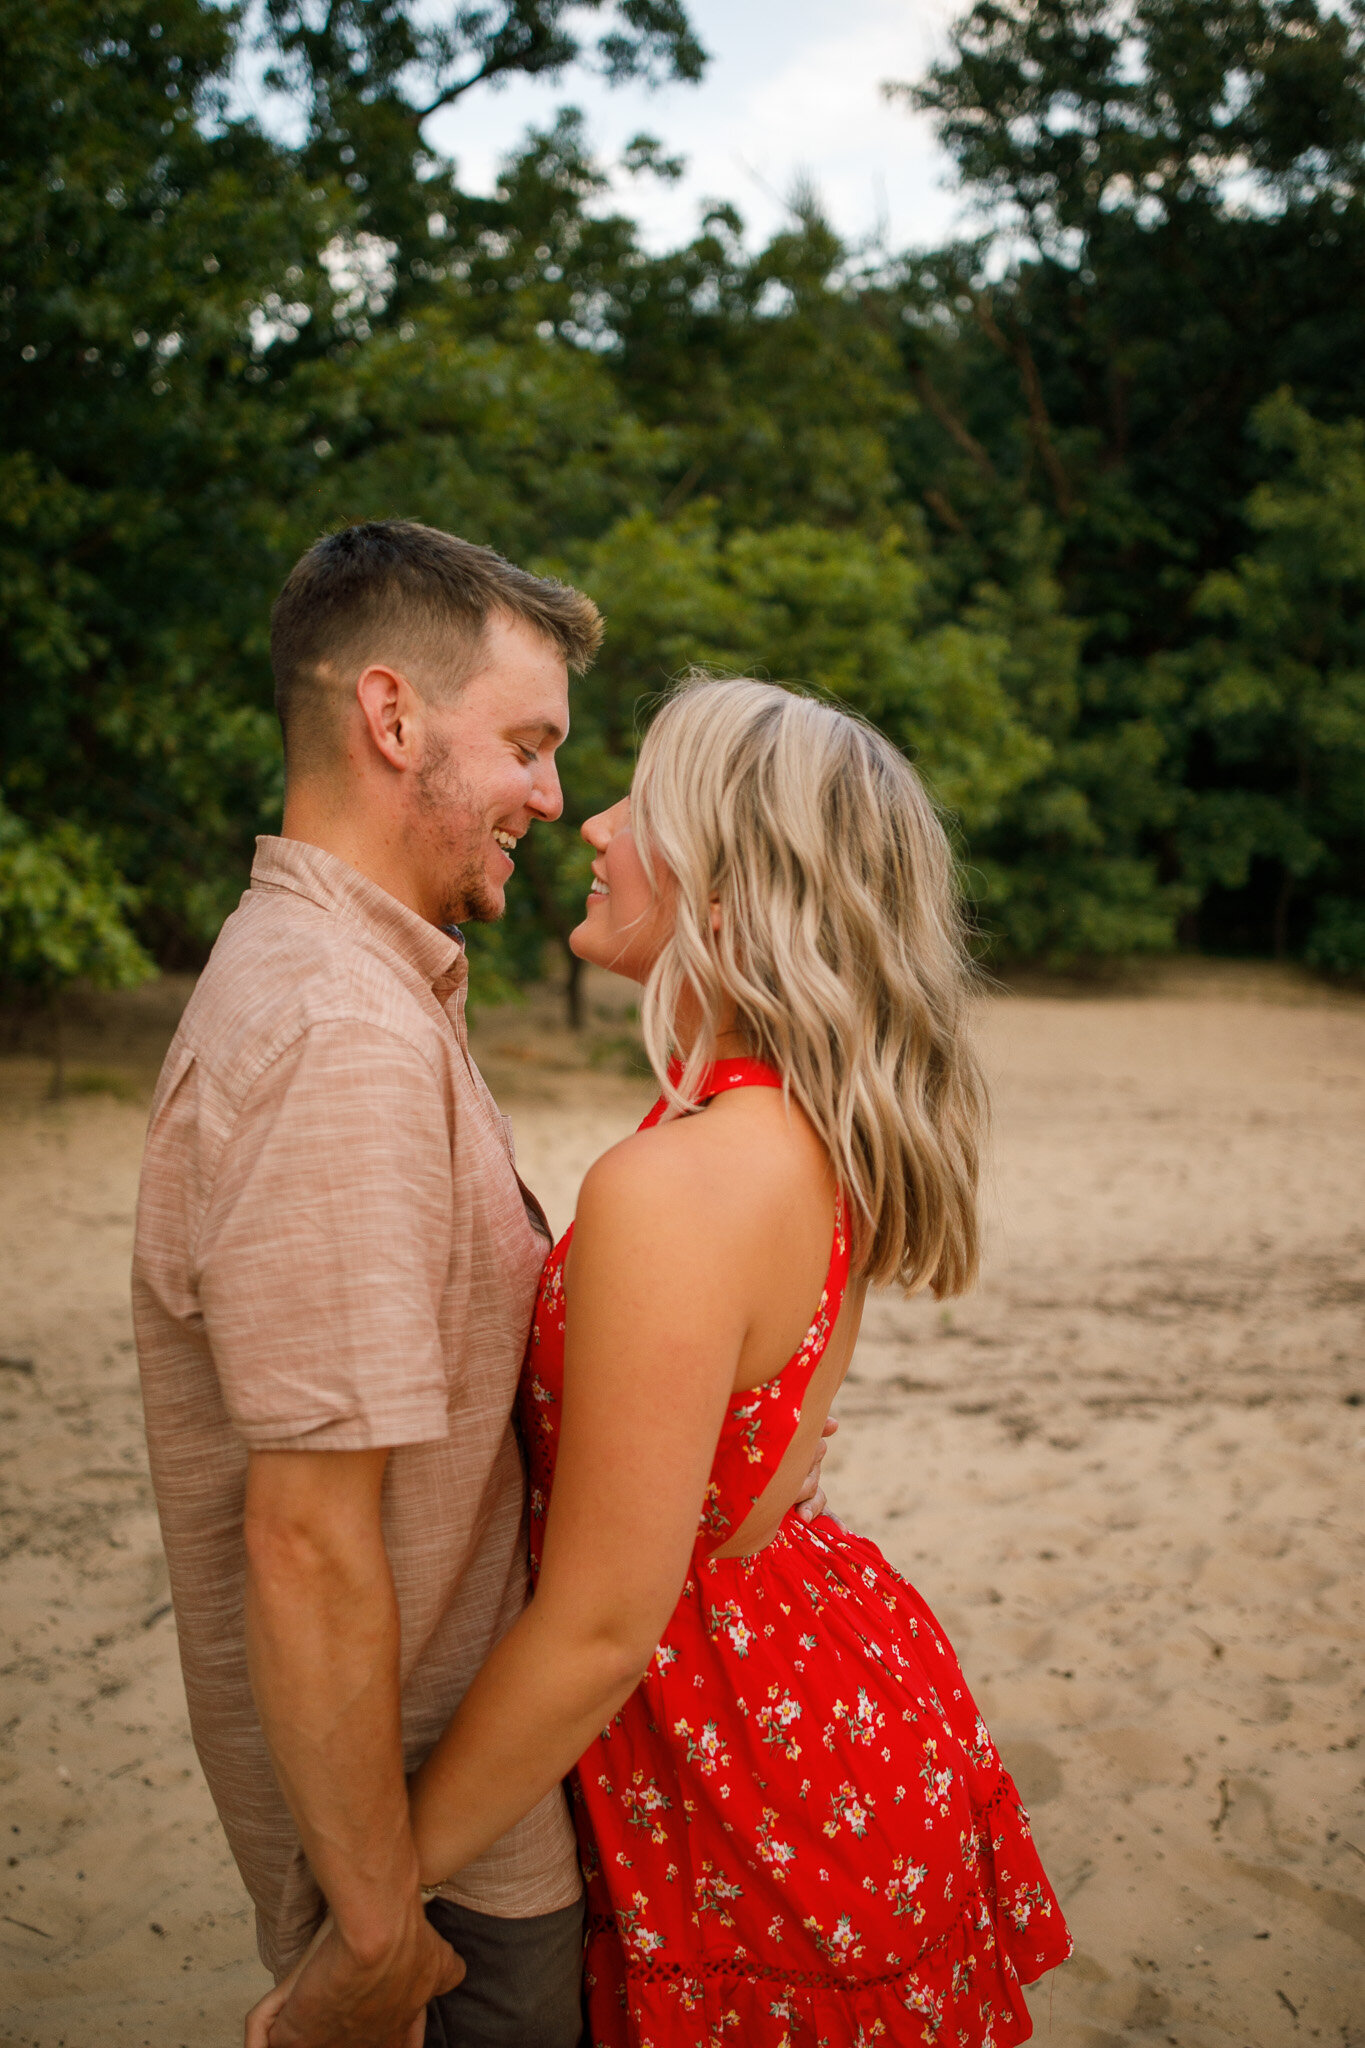 Chris and Kaleen Summer 2020 - Provin Trails - Grand Rapids Wedding Photographer - West Michigan Wedding Photographer - J Darling Photo 017.jpg